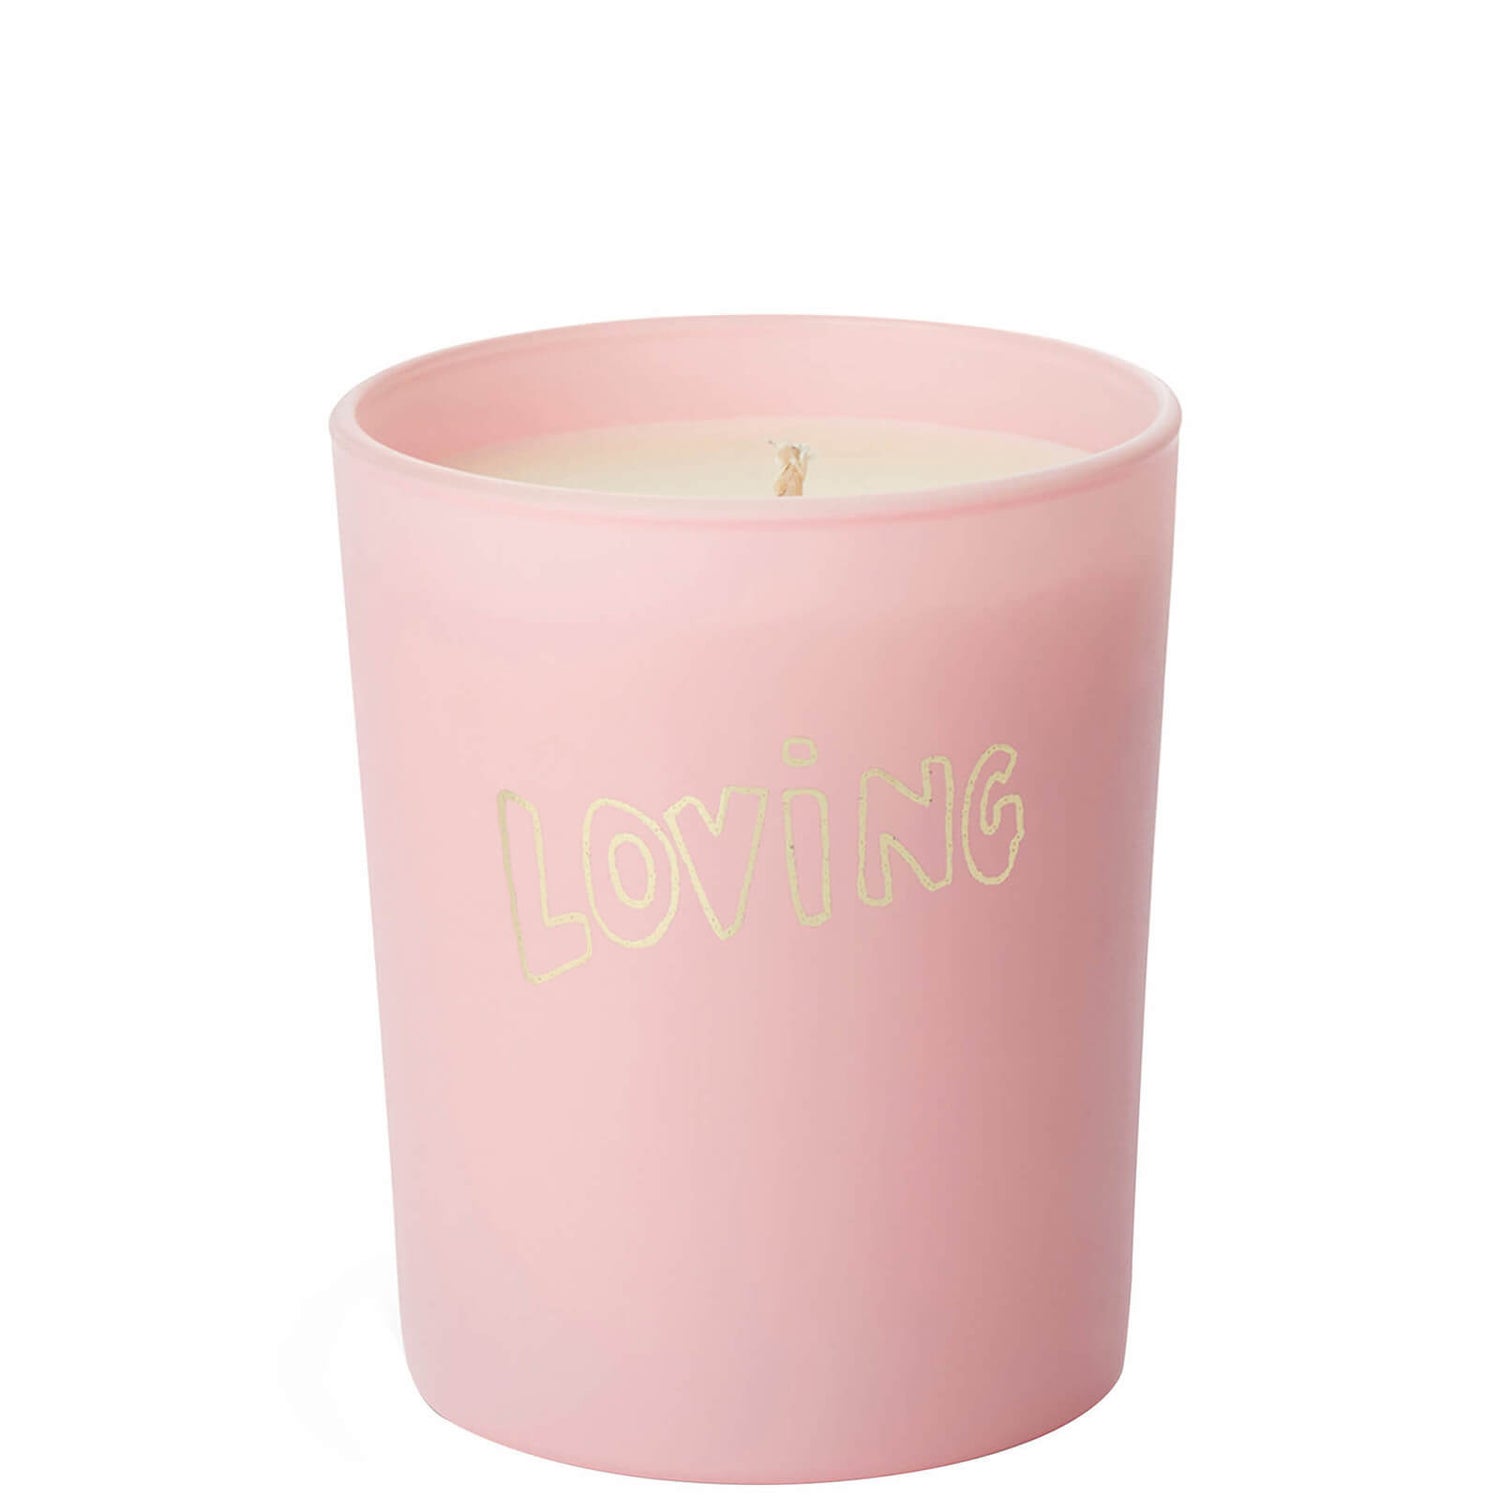 Bella Freud Limited Edition Pink Loving Candle (Tuberose & Sandalwood)